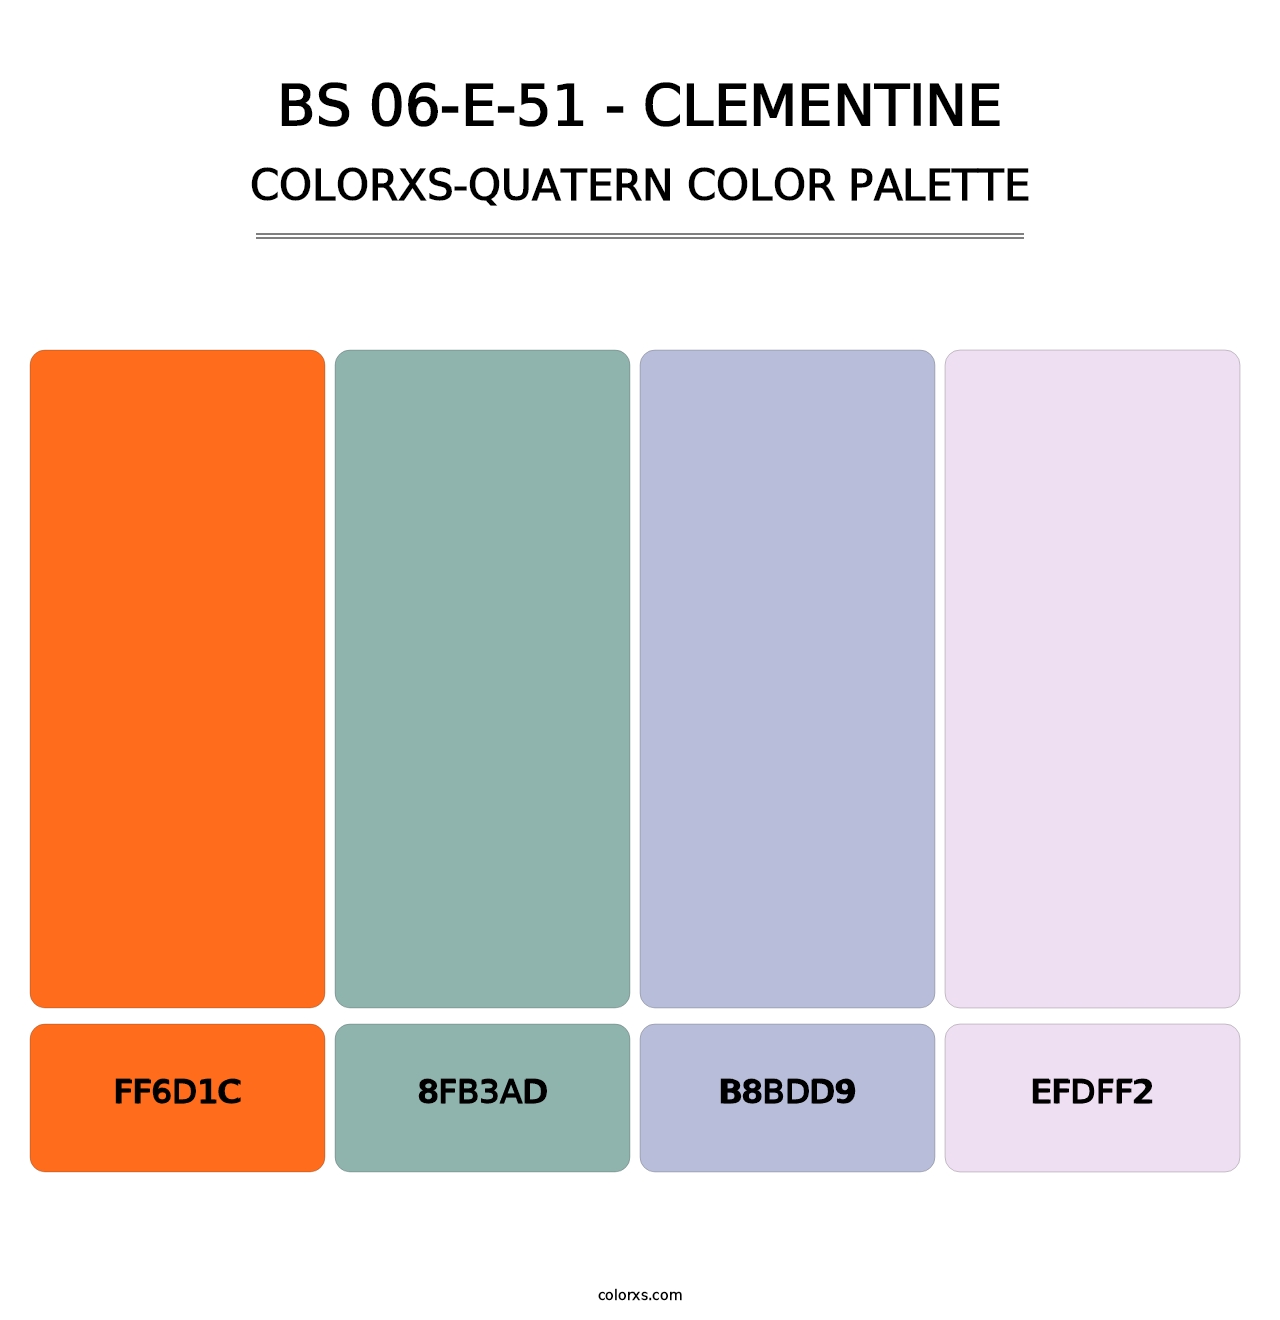 BS 06-E-51 - Clementine - Colorxs Quatern Palette